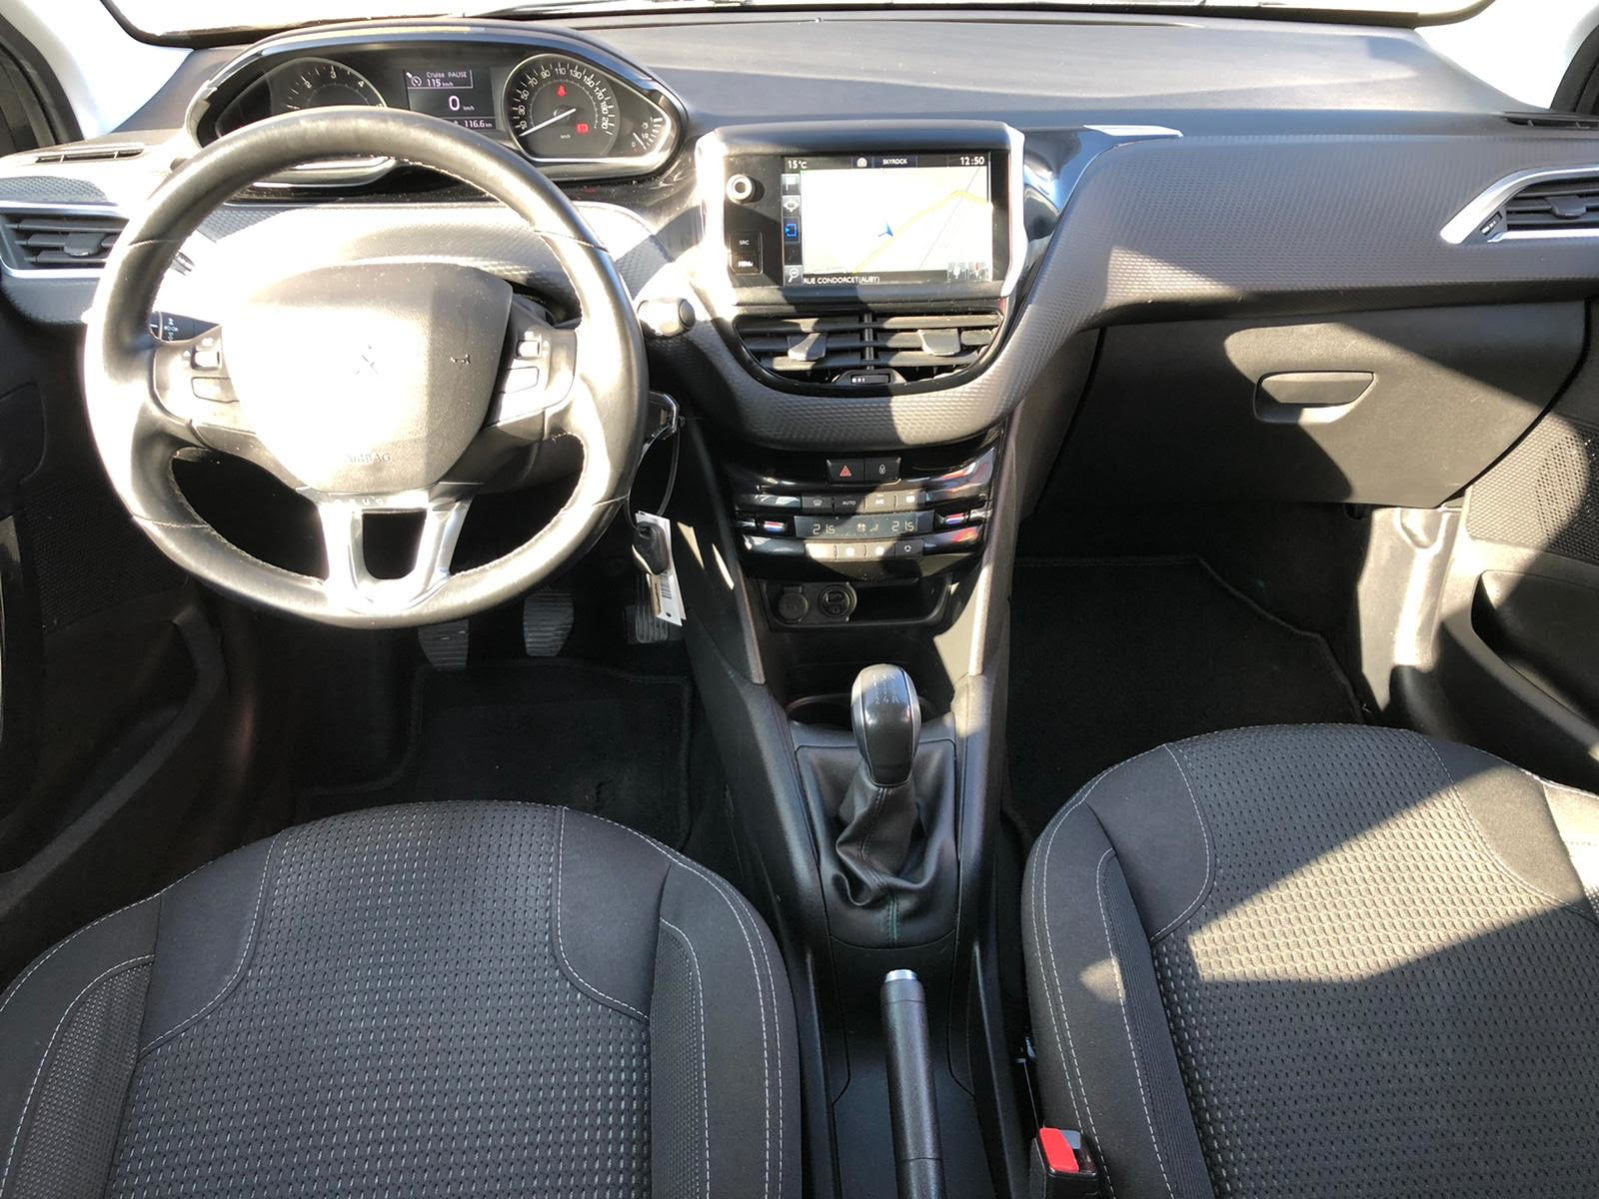 Peugeot 208 1.6 HDI 100 LED/GPS/CAR PLAY/16" - JNS MOTORS